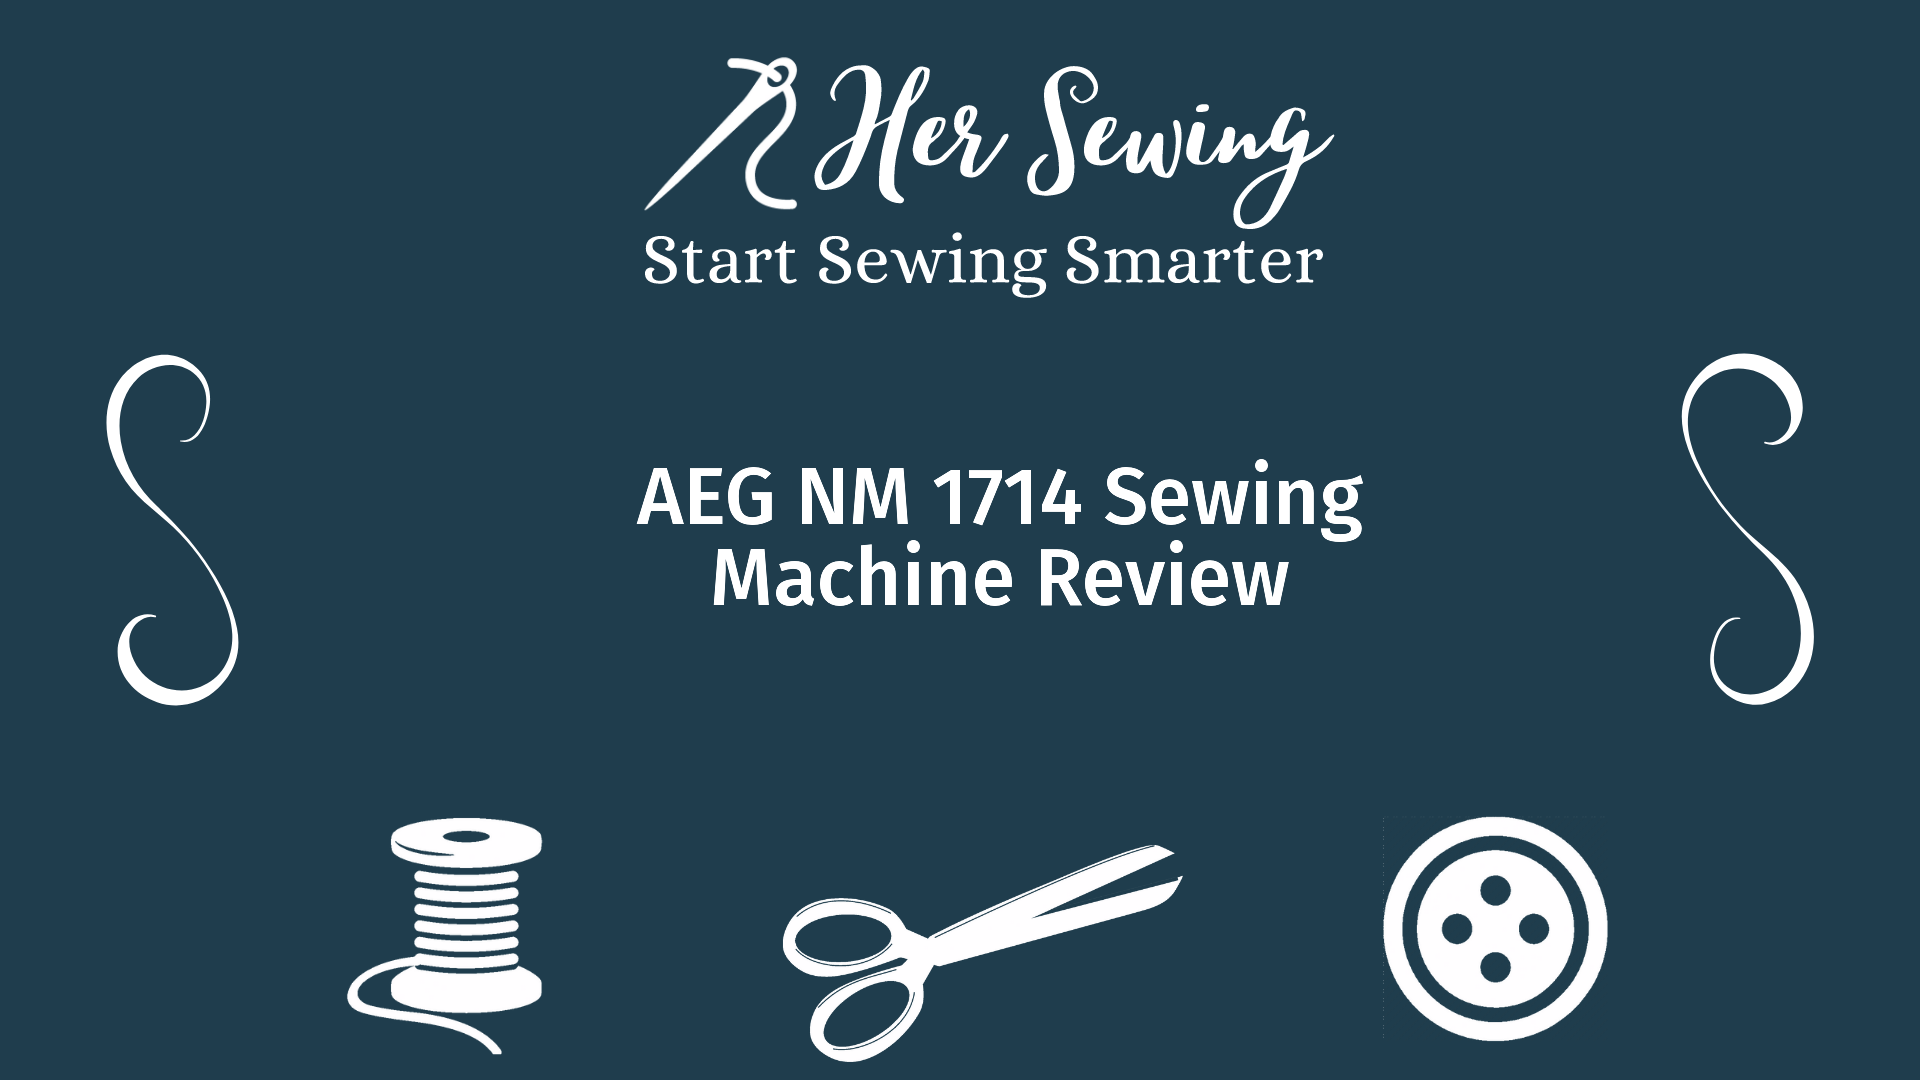 AEG NM 1714 Sewing Machine Review